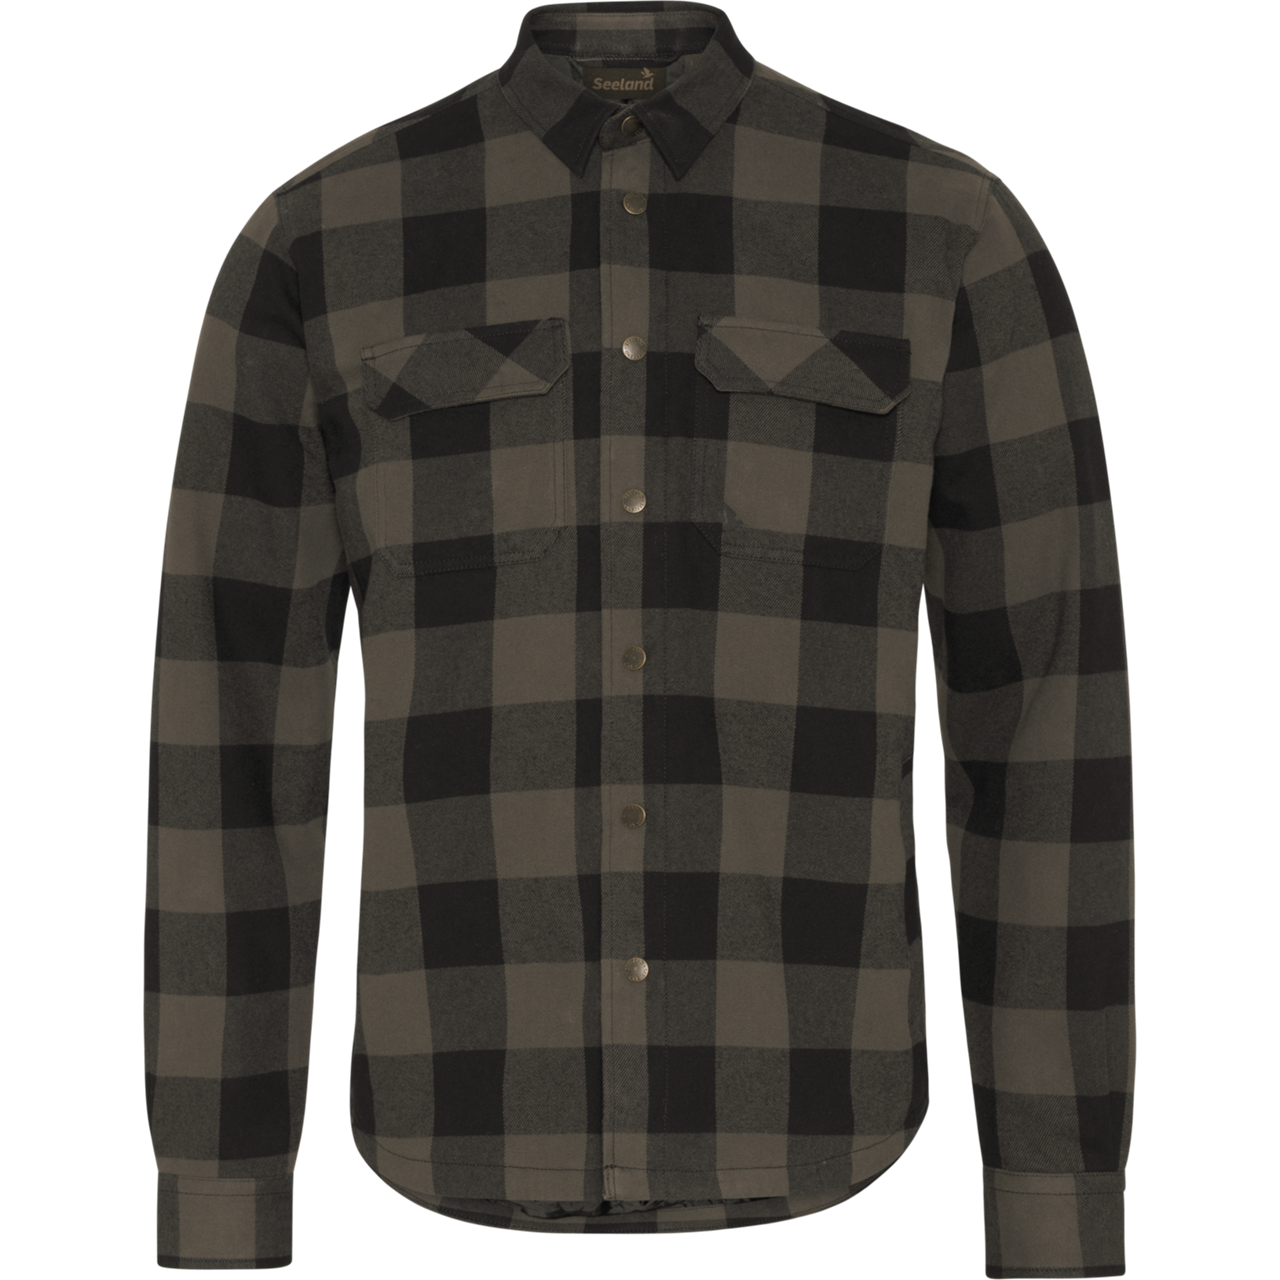 Se Seeland Canada skjorte limited edition (Grey Check, 2XL) hos Specialbutikken